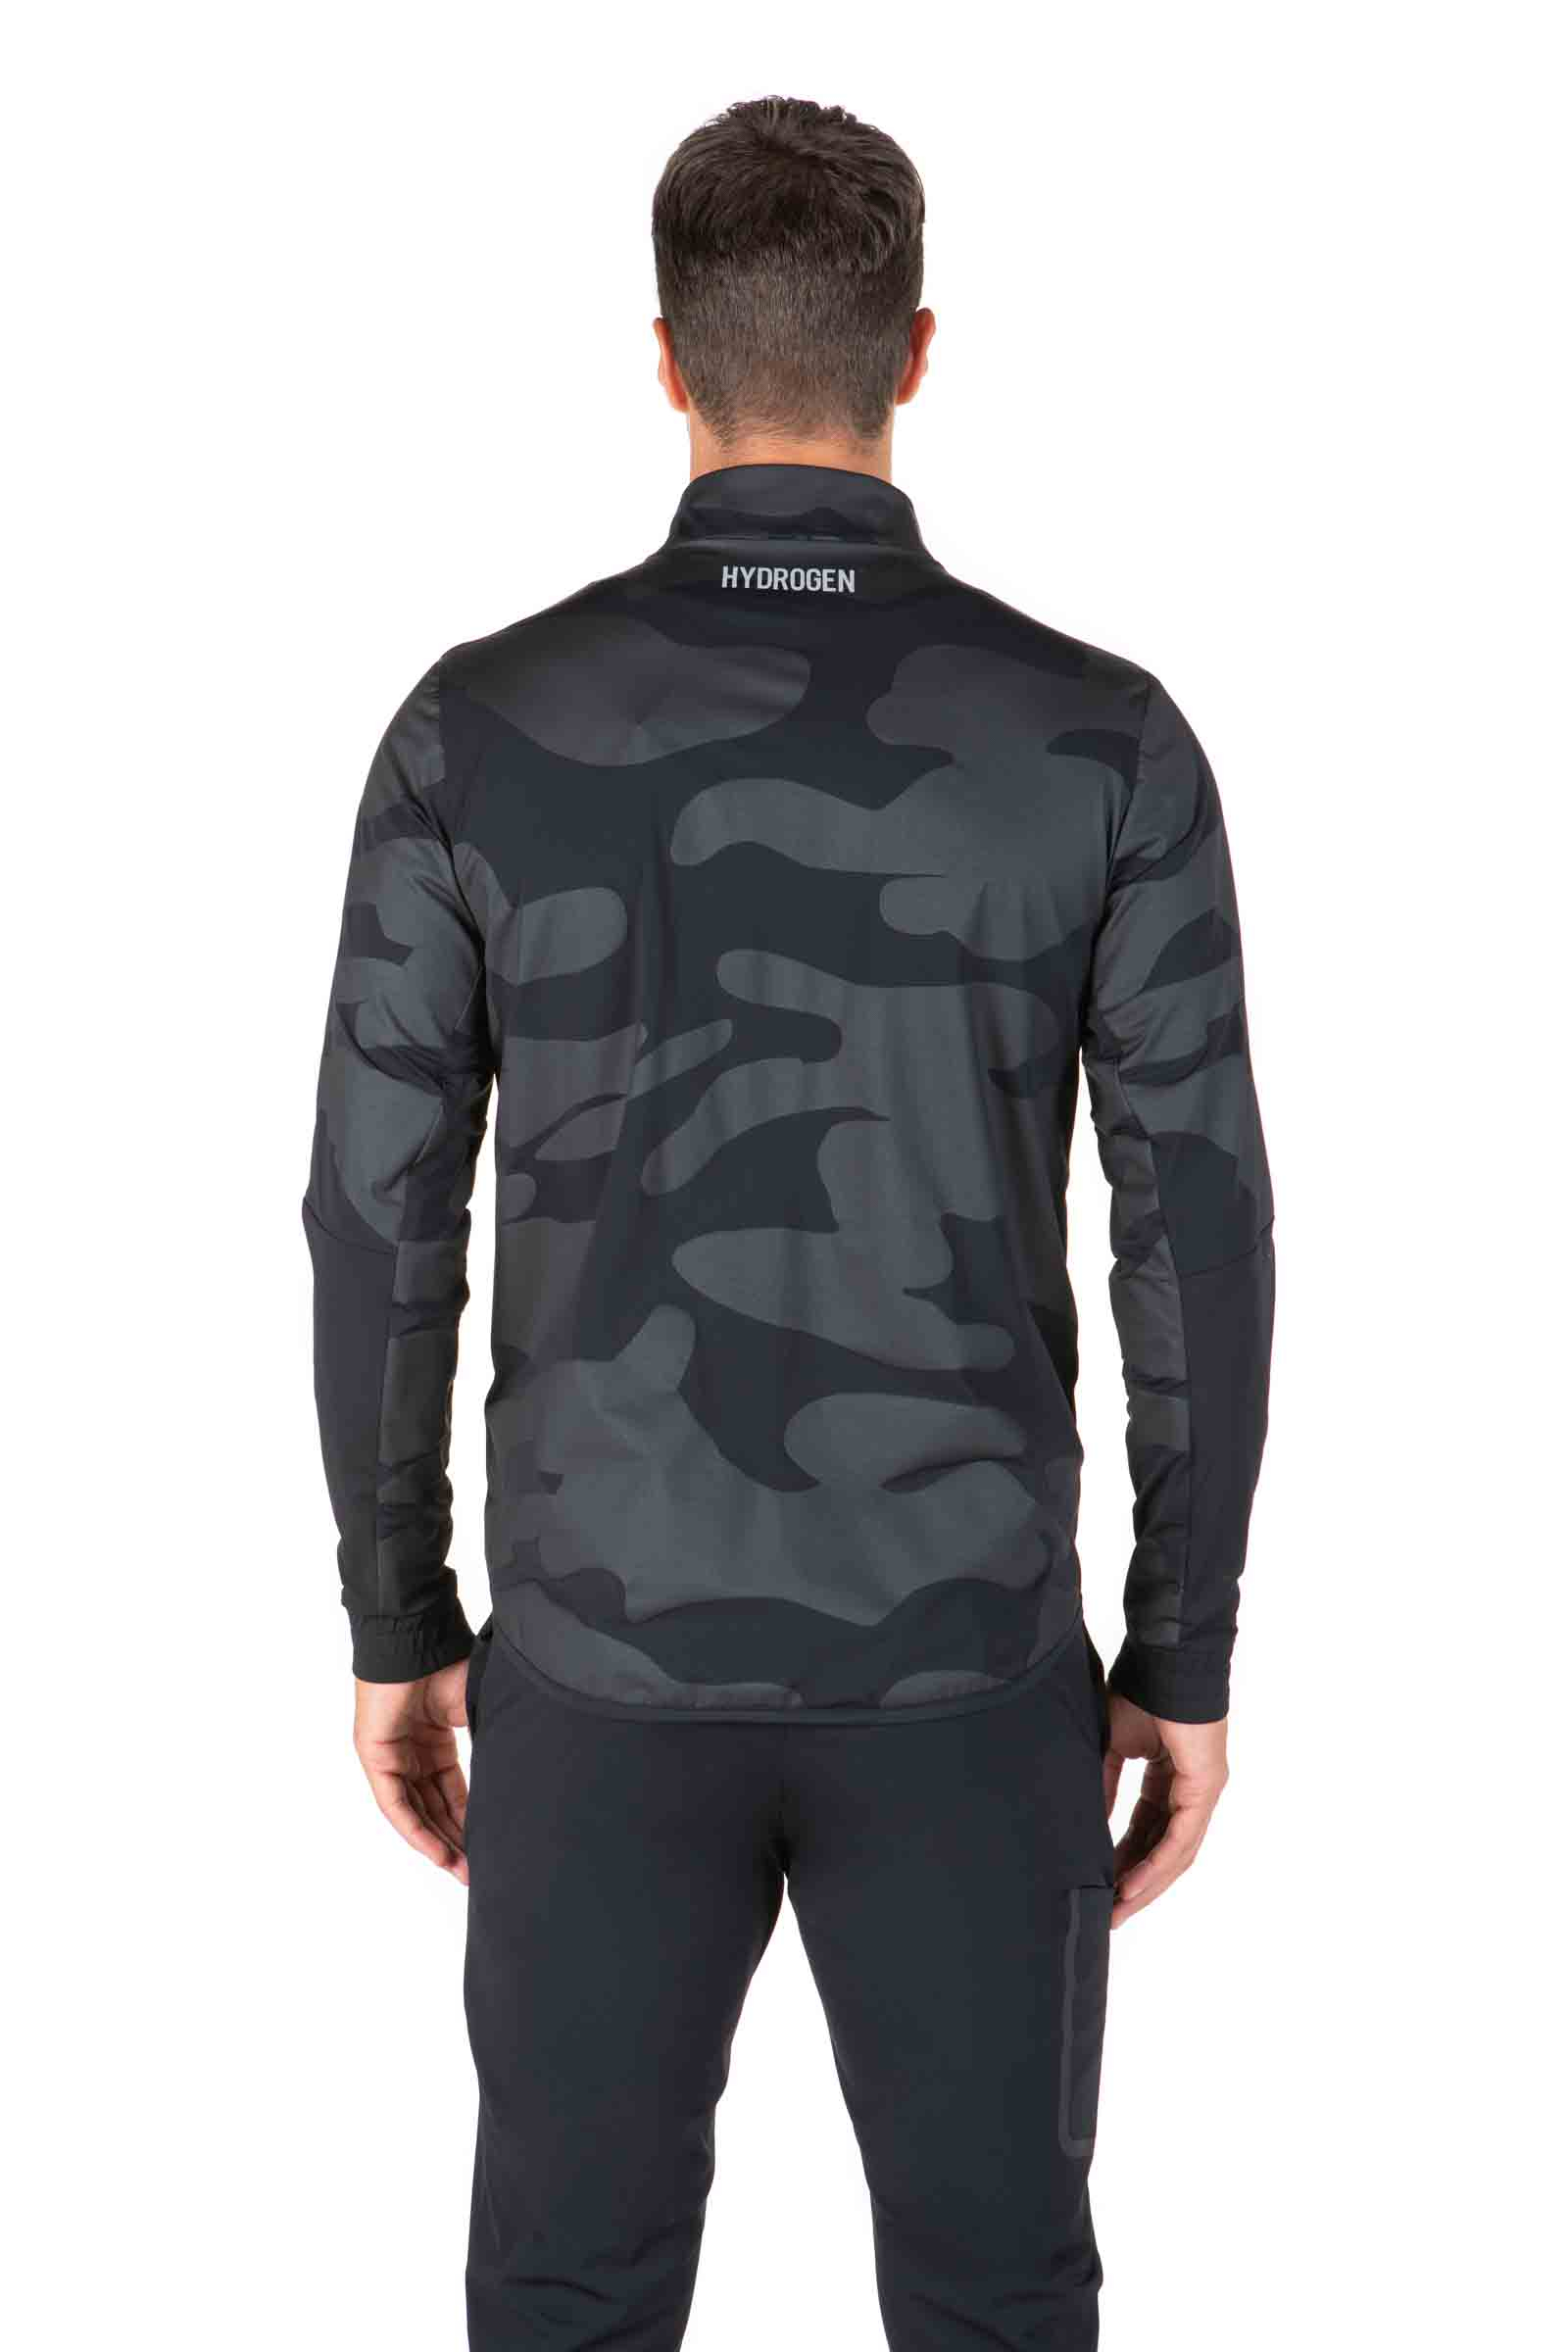 GOLF JKT - BLACK CAMOUFLAGE - Abbigliamento sportivo | Hydrogen